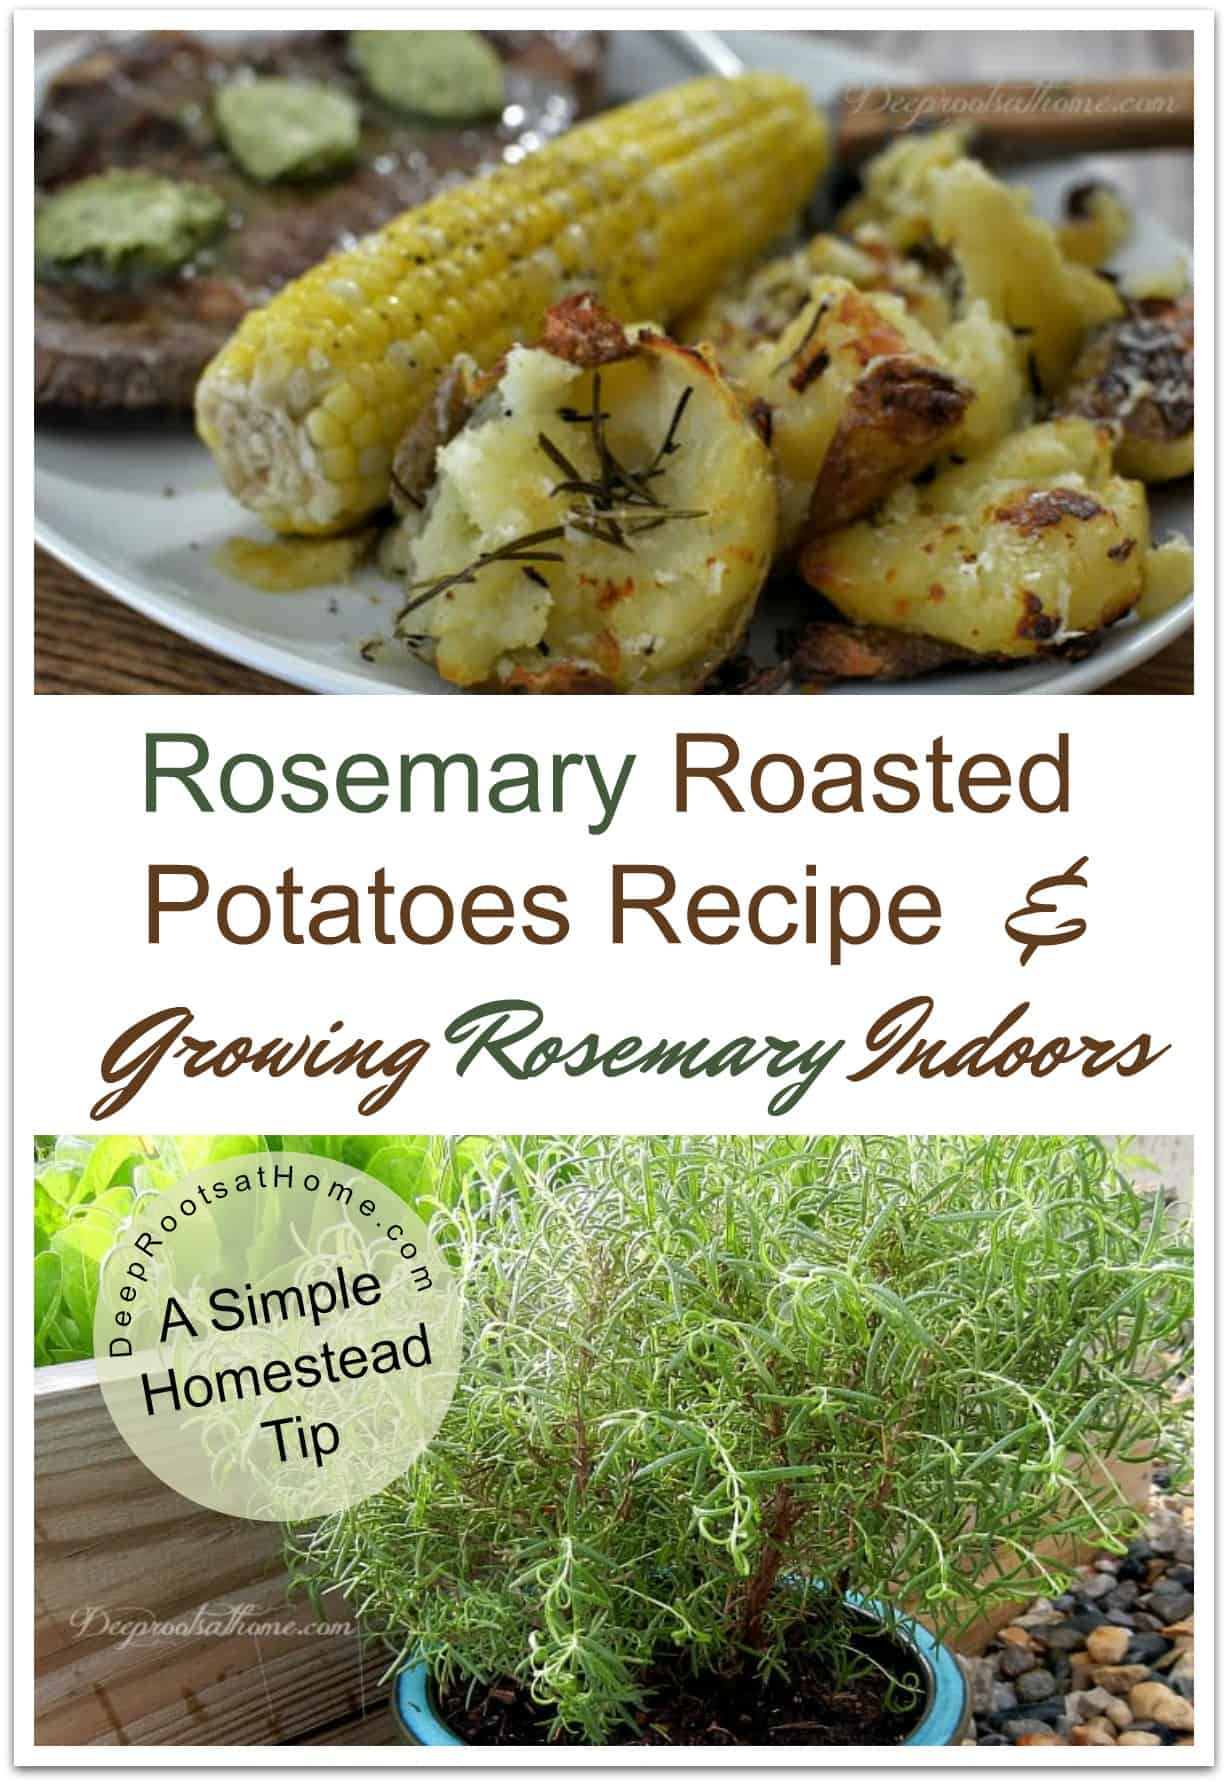 Rosemary Roasted Potatoes Recipe & Growing Rosemary Indoors. Rosemary roasted potatoes, corn and steak.